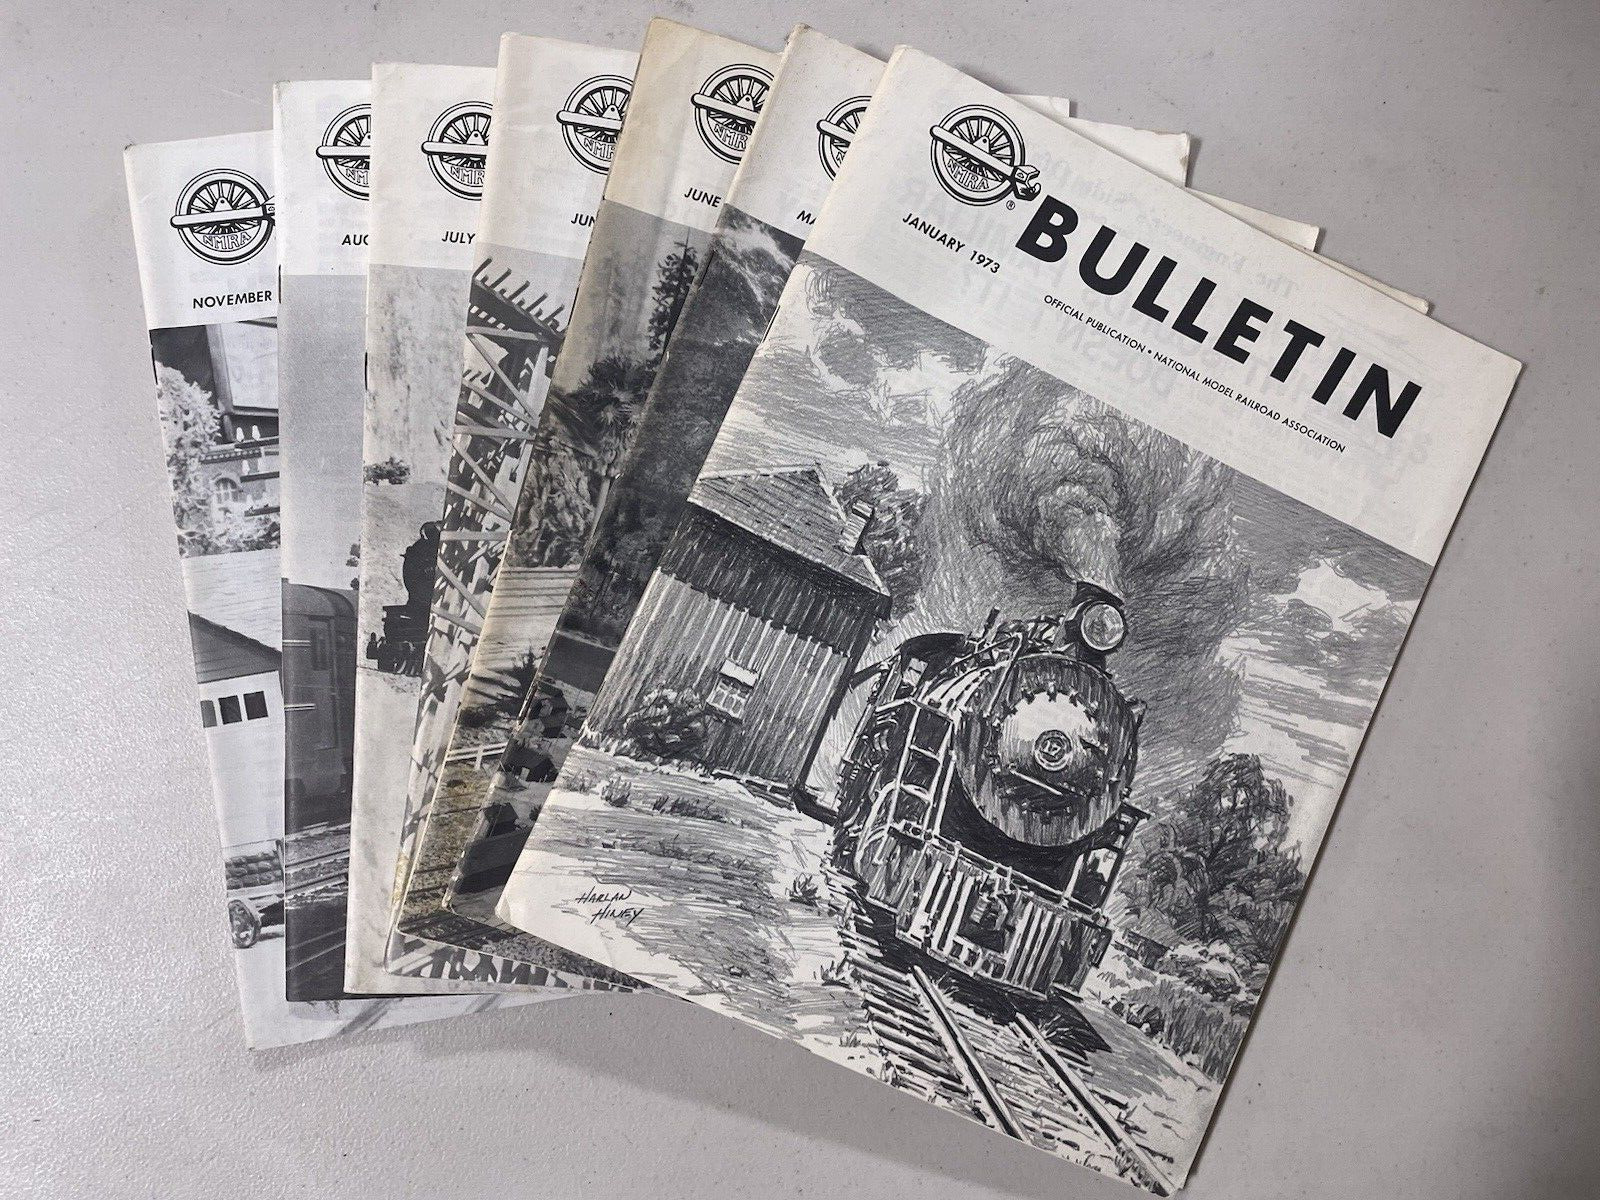 Large Lot of 100+ NMRA National Model Railroad Association Bulletins, 1973-1999